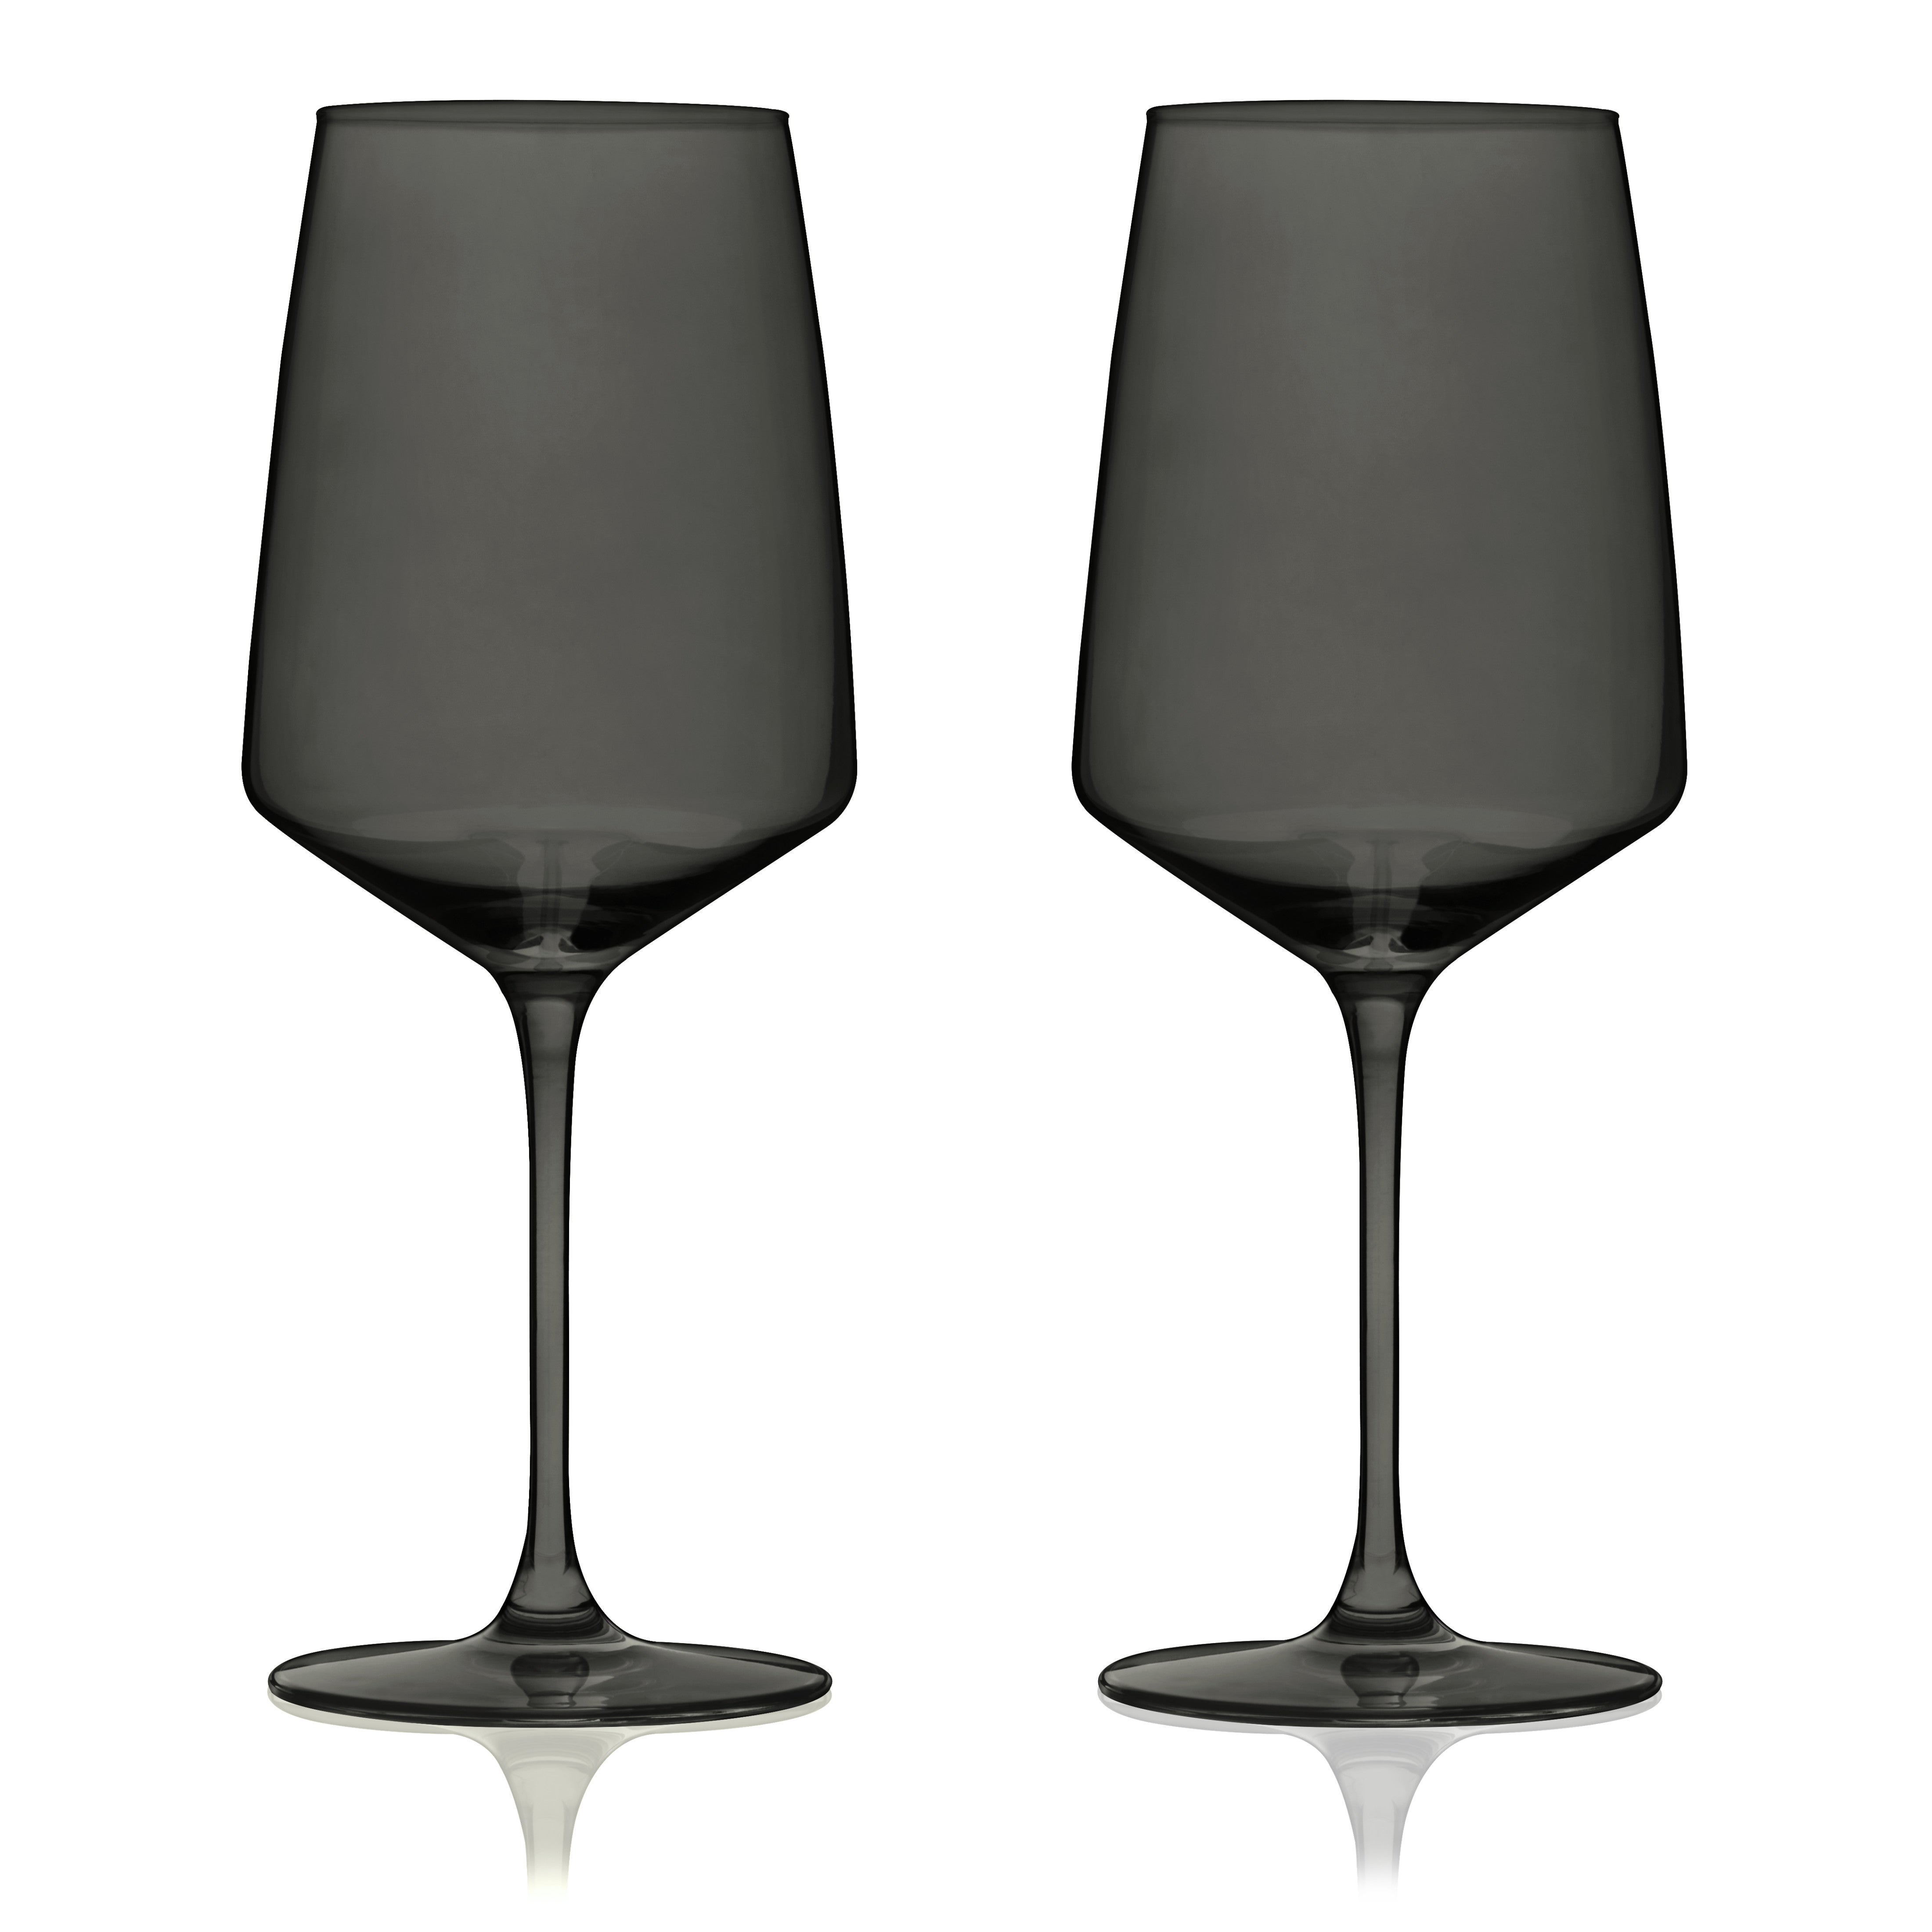 Reserve Nouveau Smoke-Colored 22oz Wine Glasses by Viski (Set of 2)